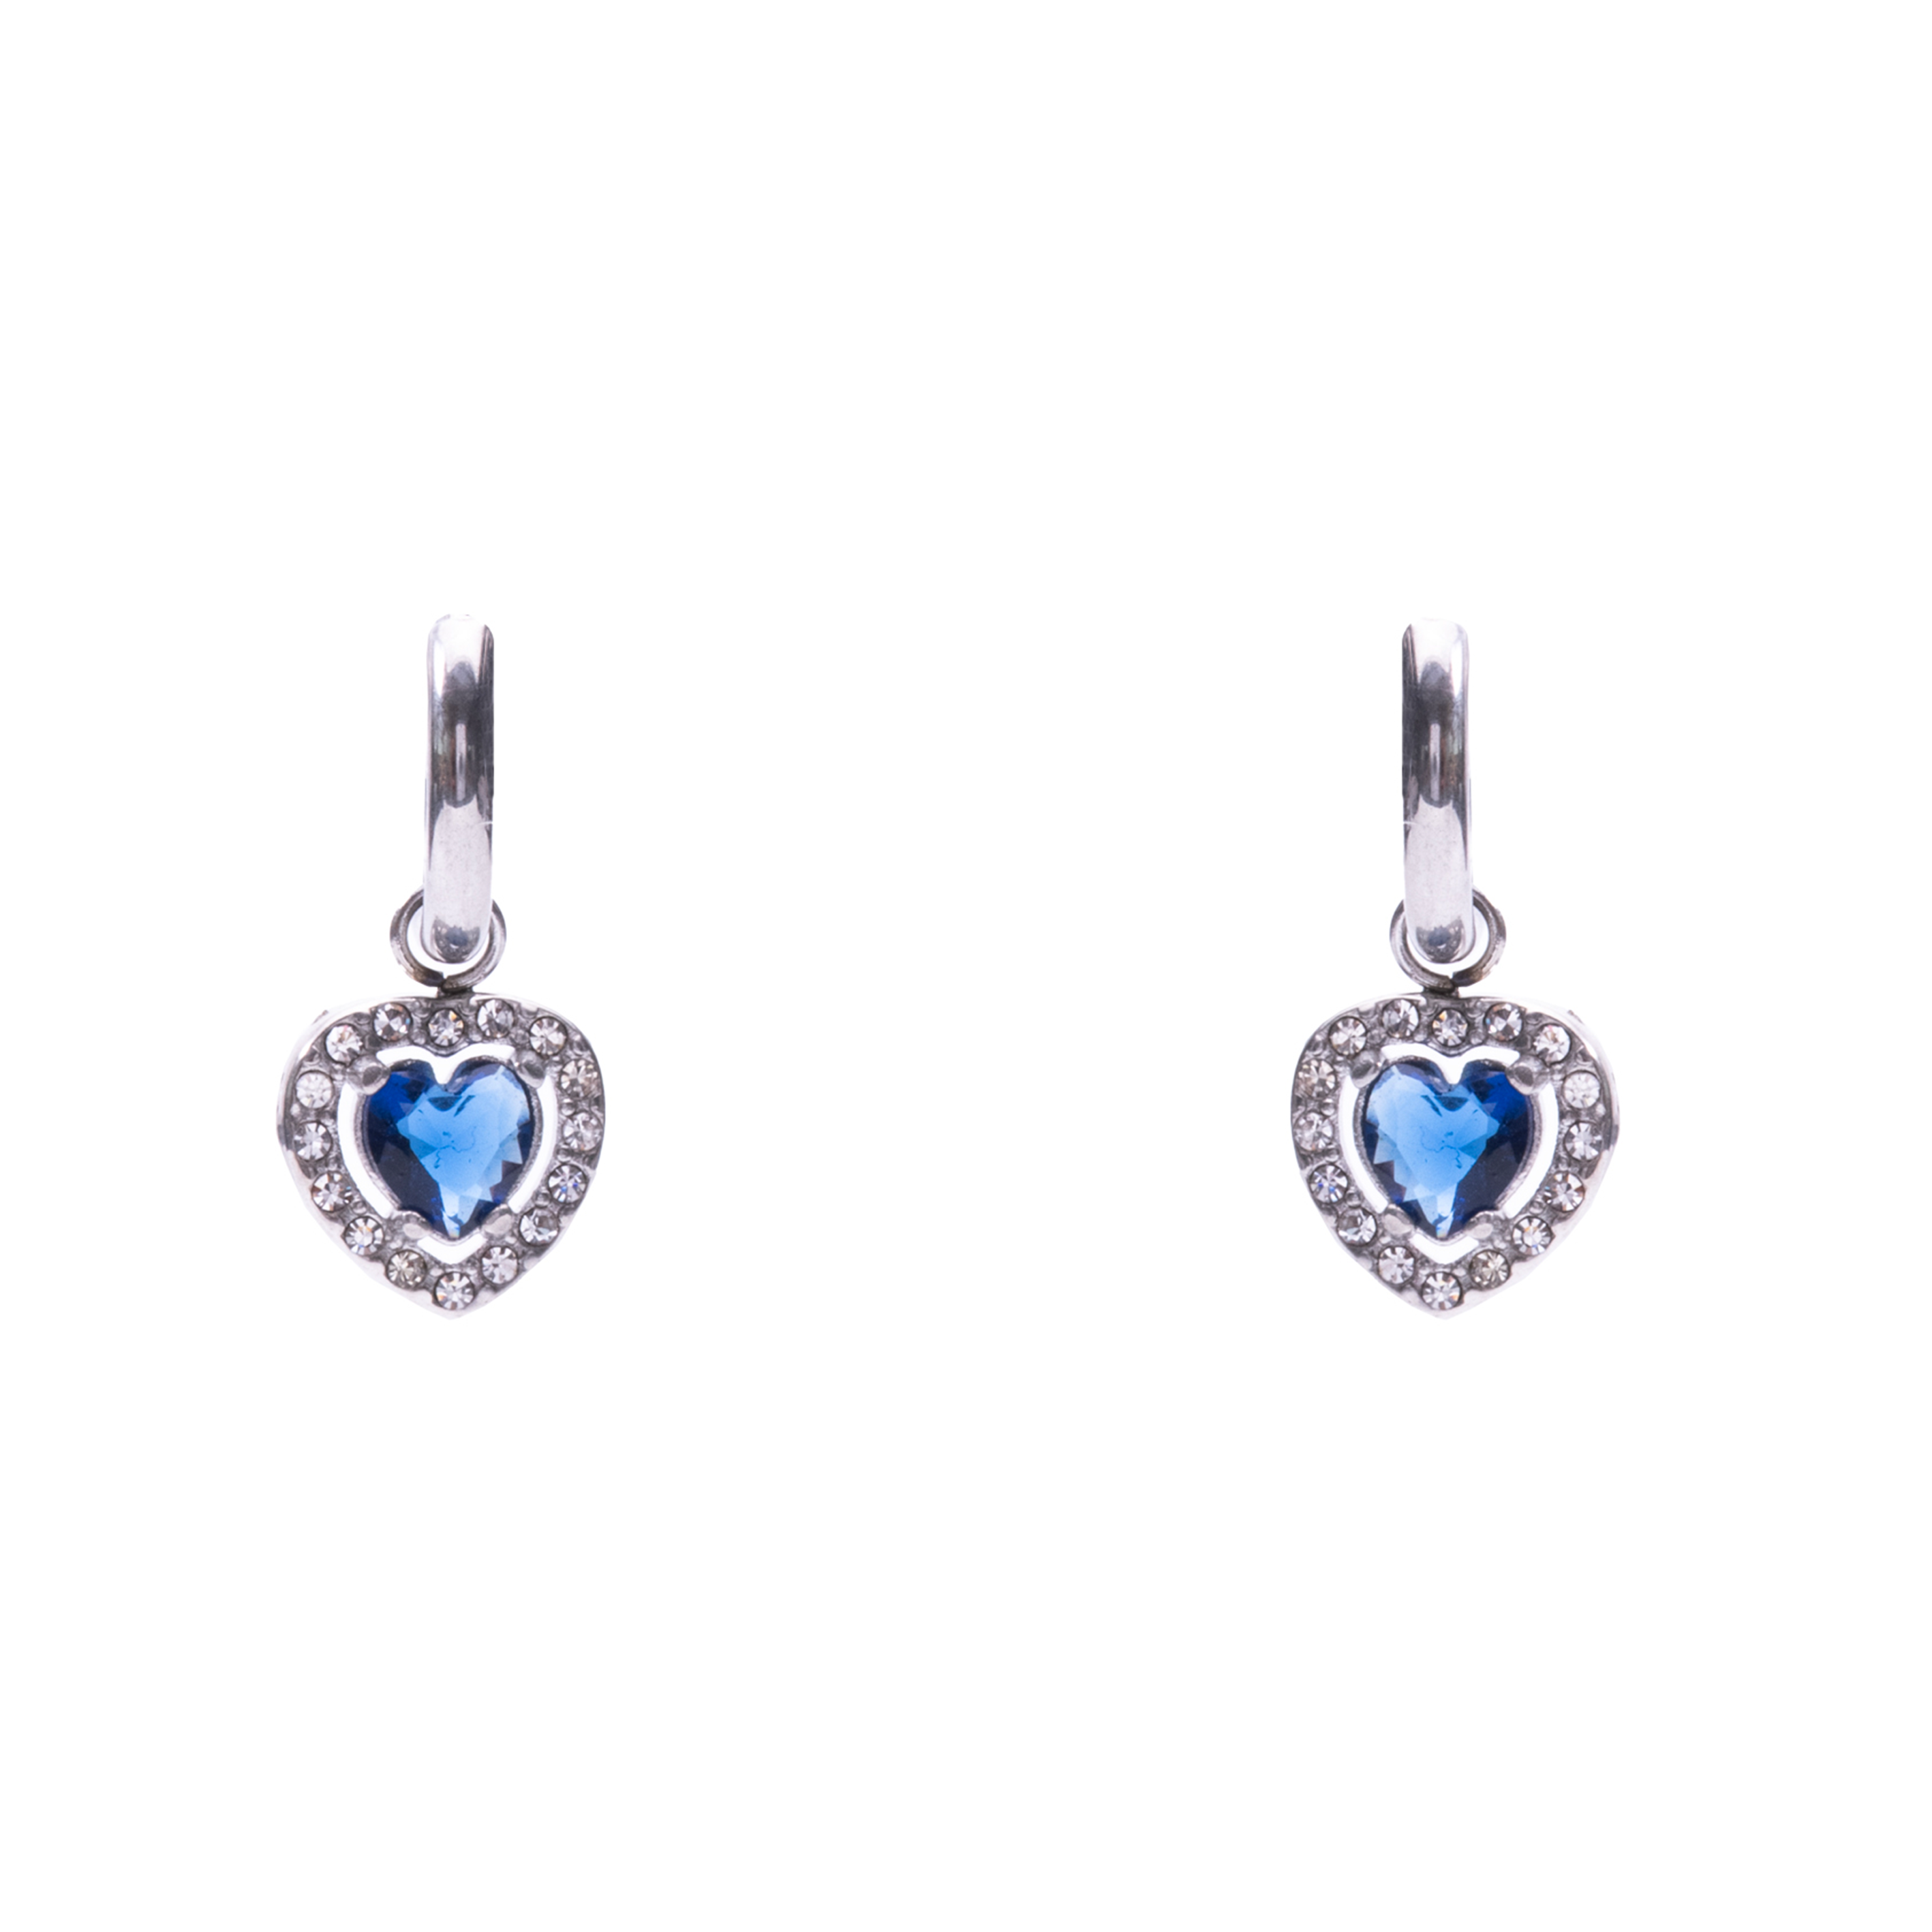 Coveri Jewels Earrings - ECJ363 orecchini